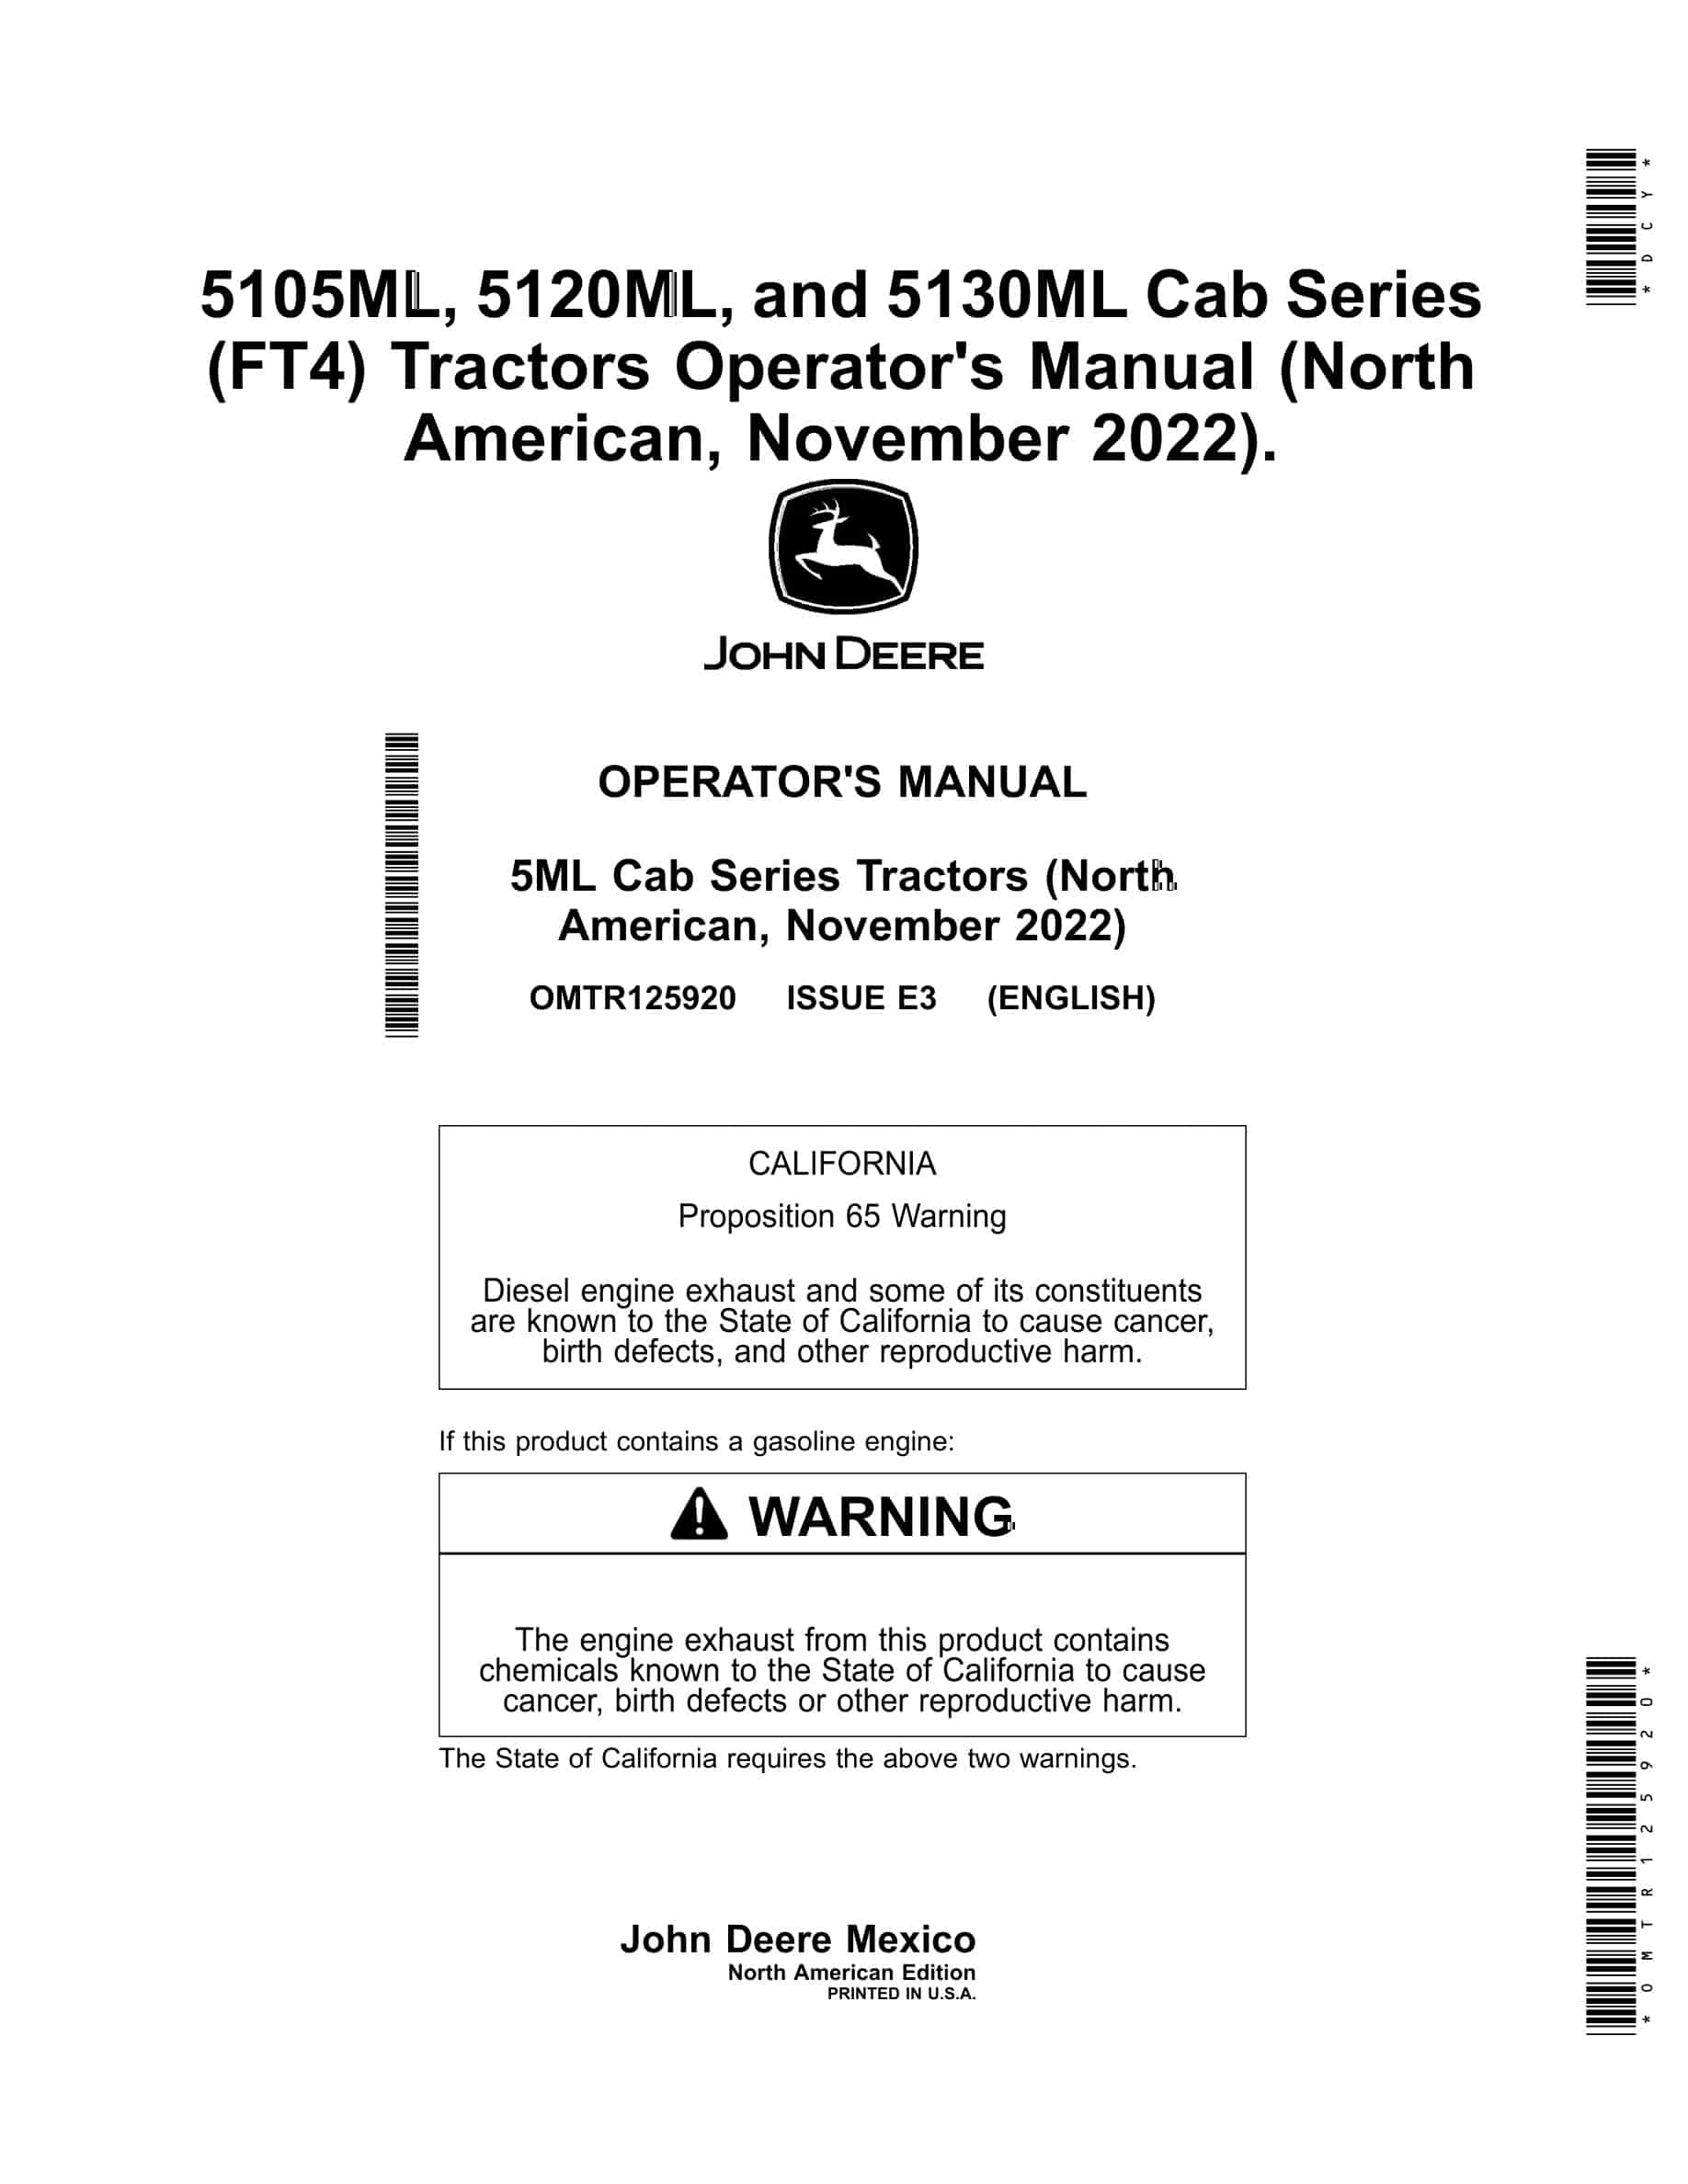 John Deere 5ml Cab Series Tractors Operator Manuals OMTR125920-1